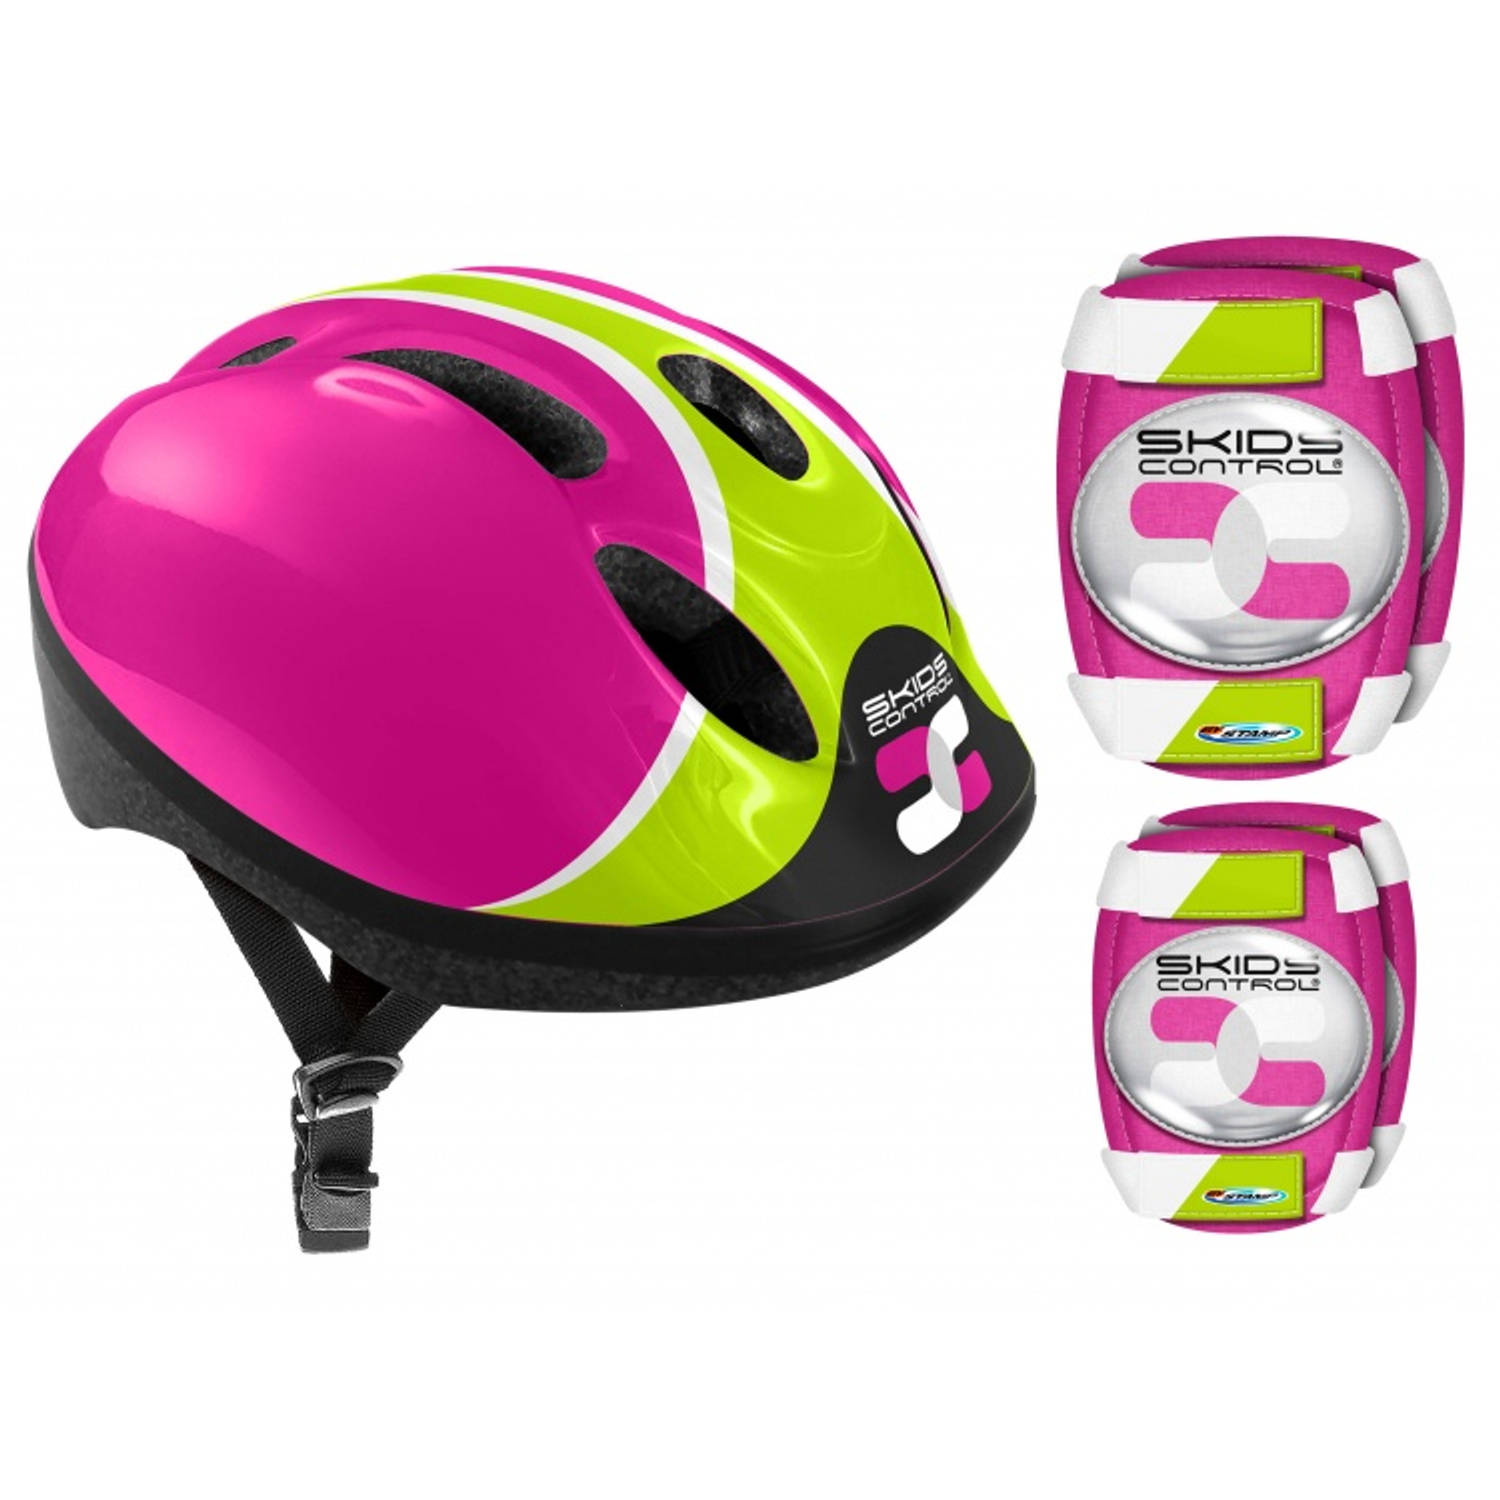 Skids Control fiets -skatehelm met bescherming meisjes roze 52 56 cm